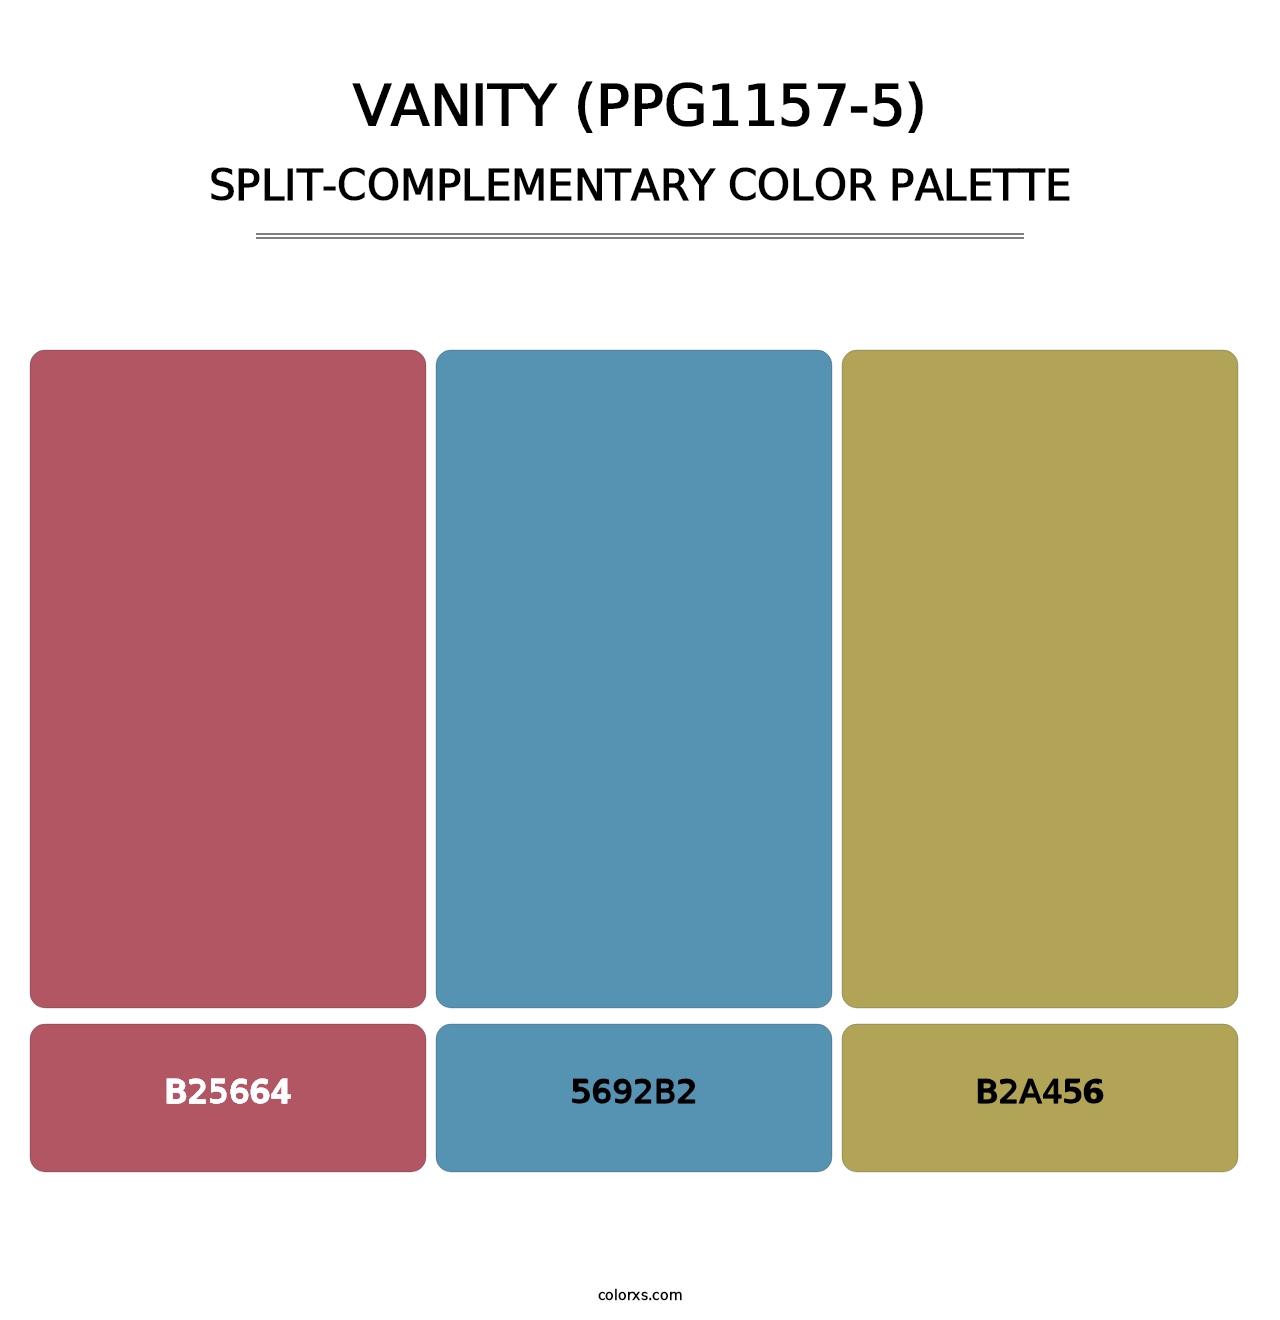 Vanity (PPG1157-5) - Split-Complementary Color Palette